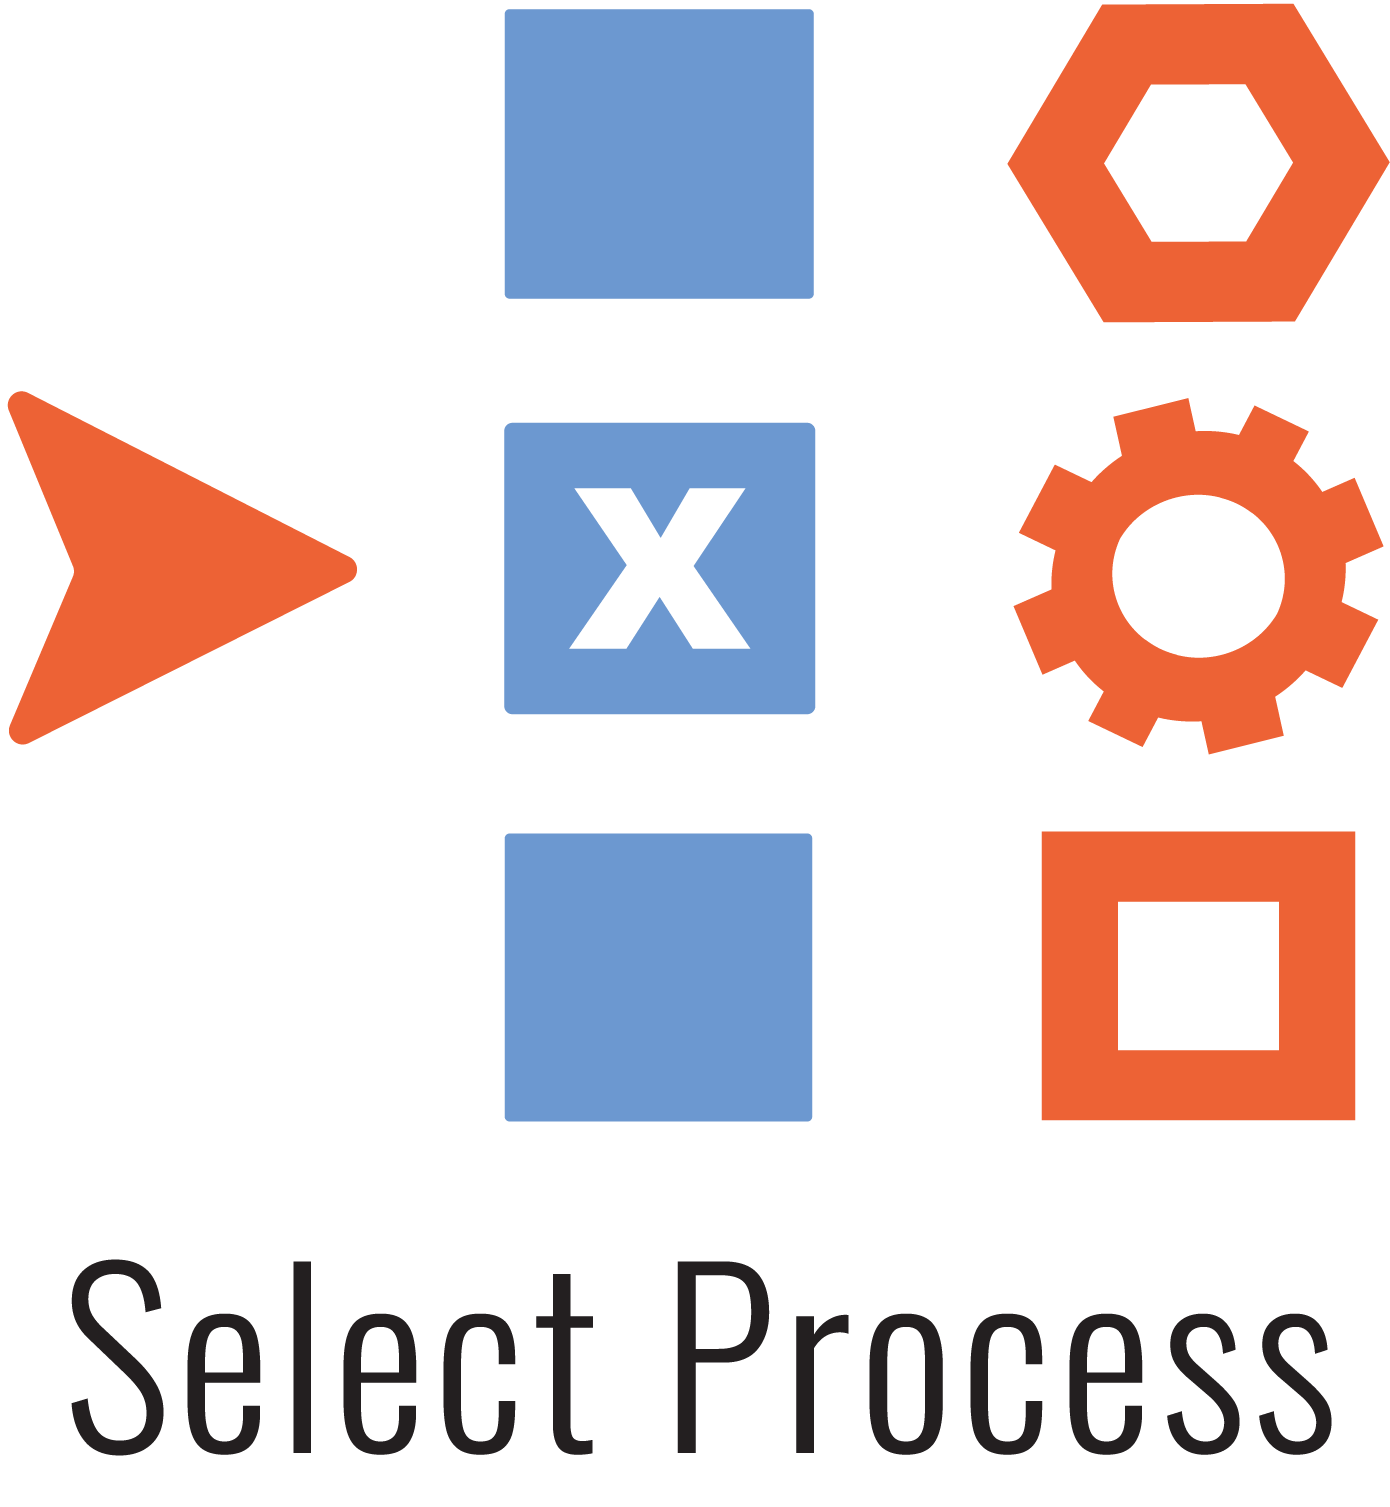 Select-Progress and model -3D Printing